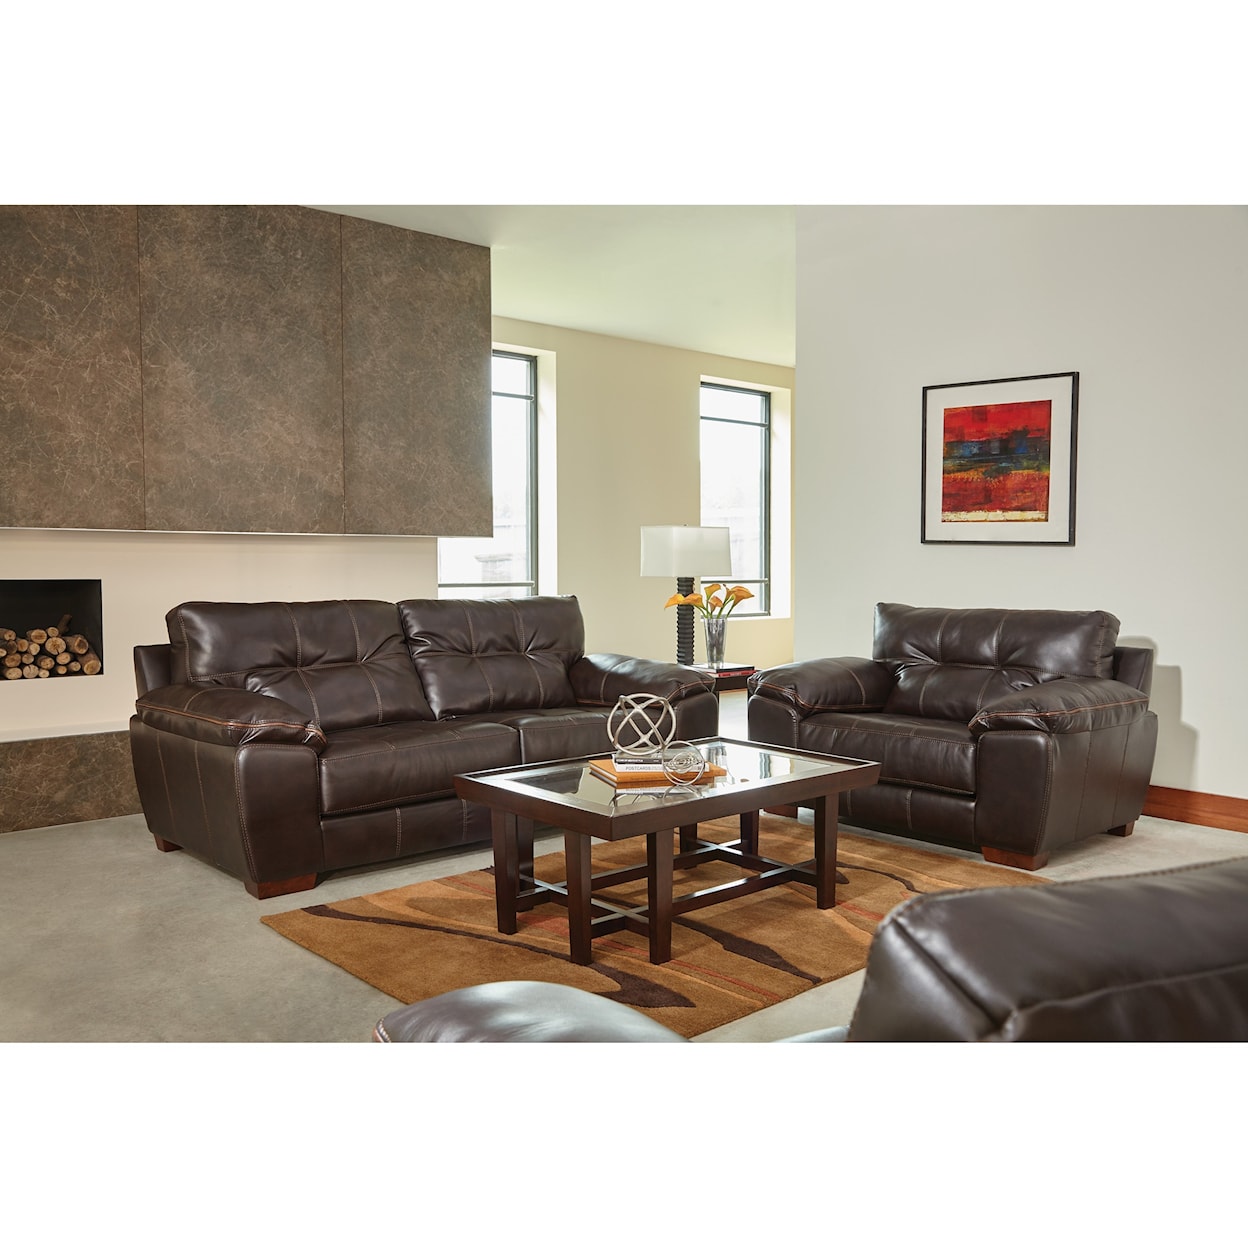 Carolina Furniture 4396 Hudson Living Room Group